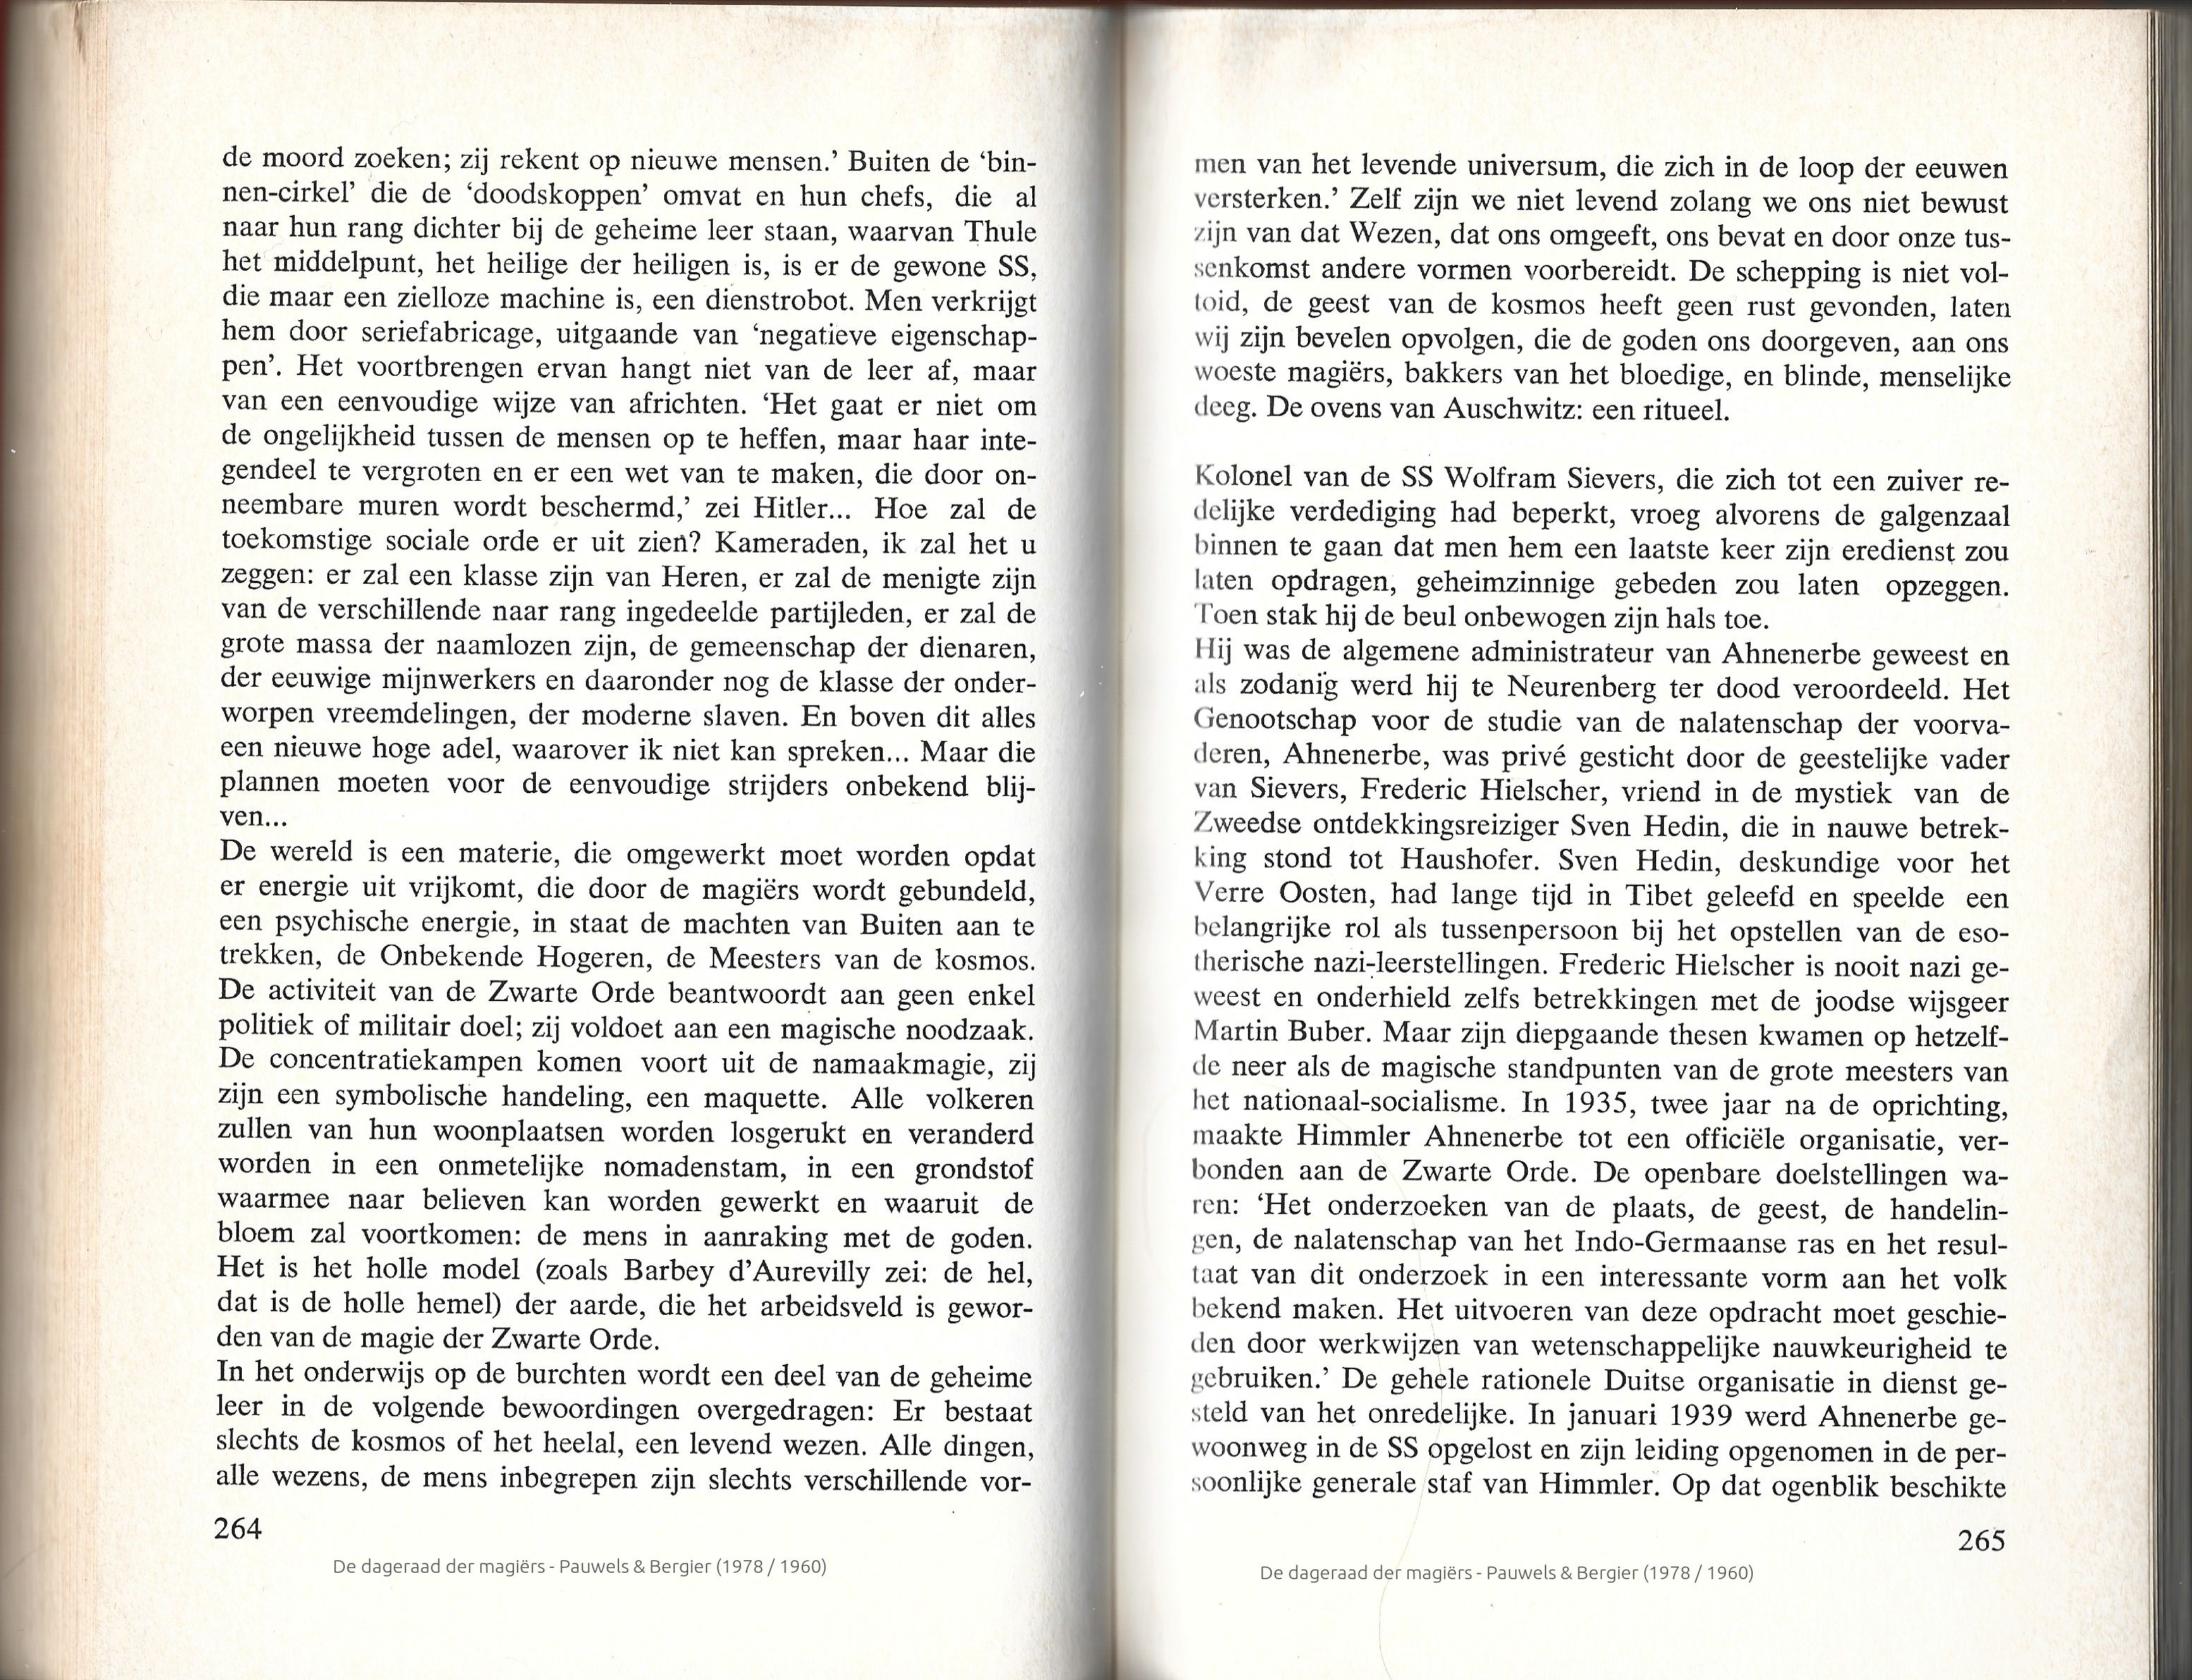 De dageraad der magiërs – Louis Pauwels & Jacques Bergier (1960), uitgave en vertaling De Bezige Bij, 9e druk, 1978. Pp. 264-265.